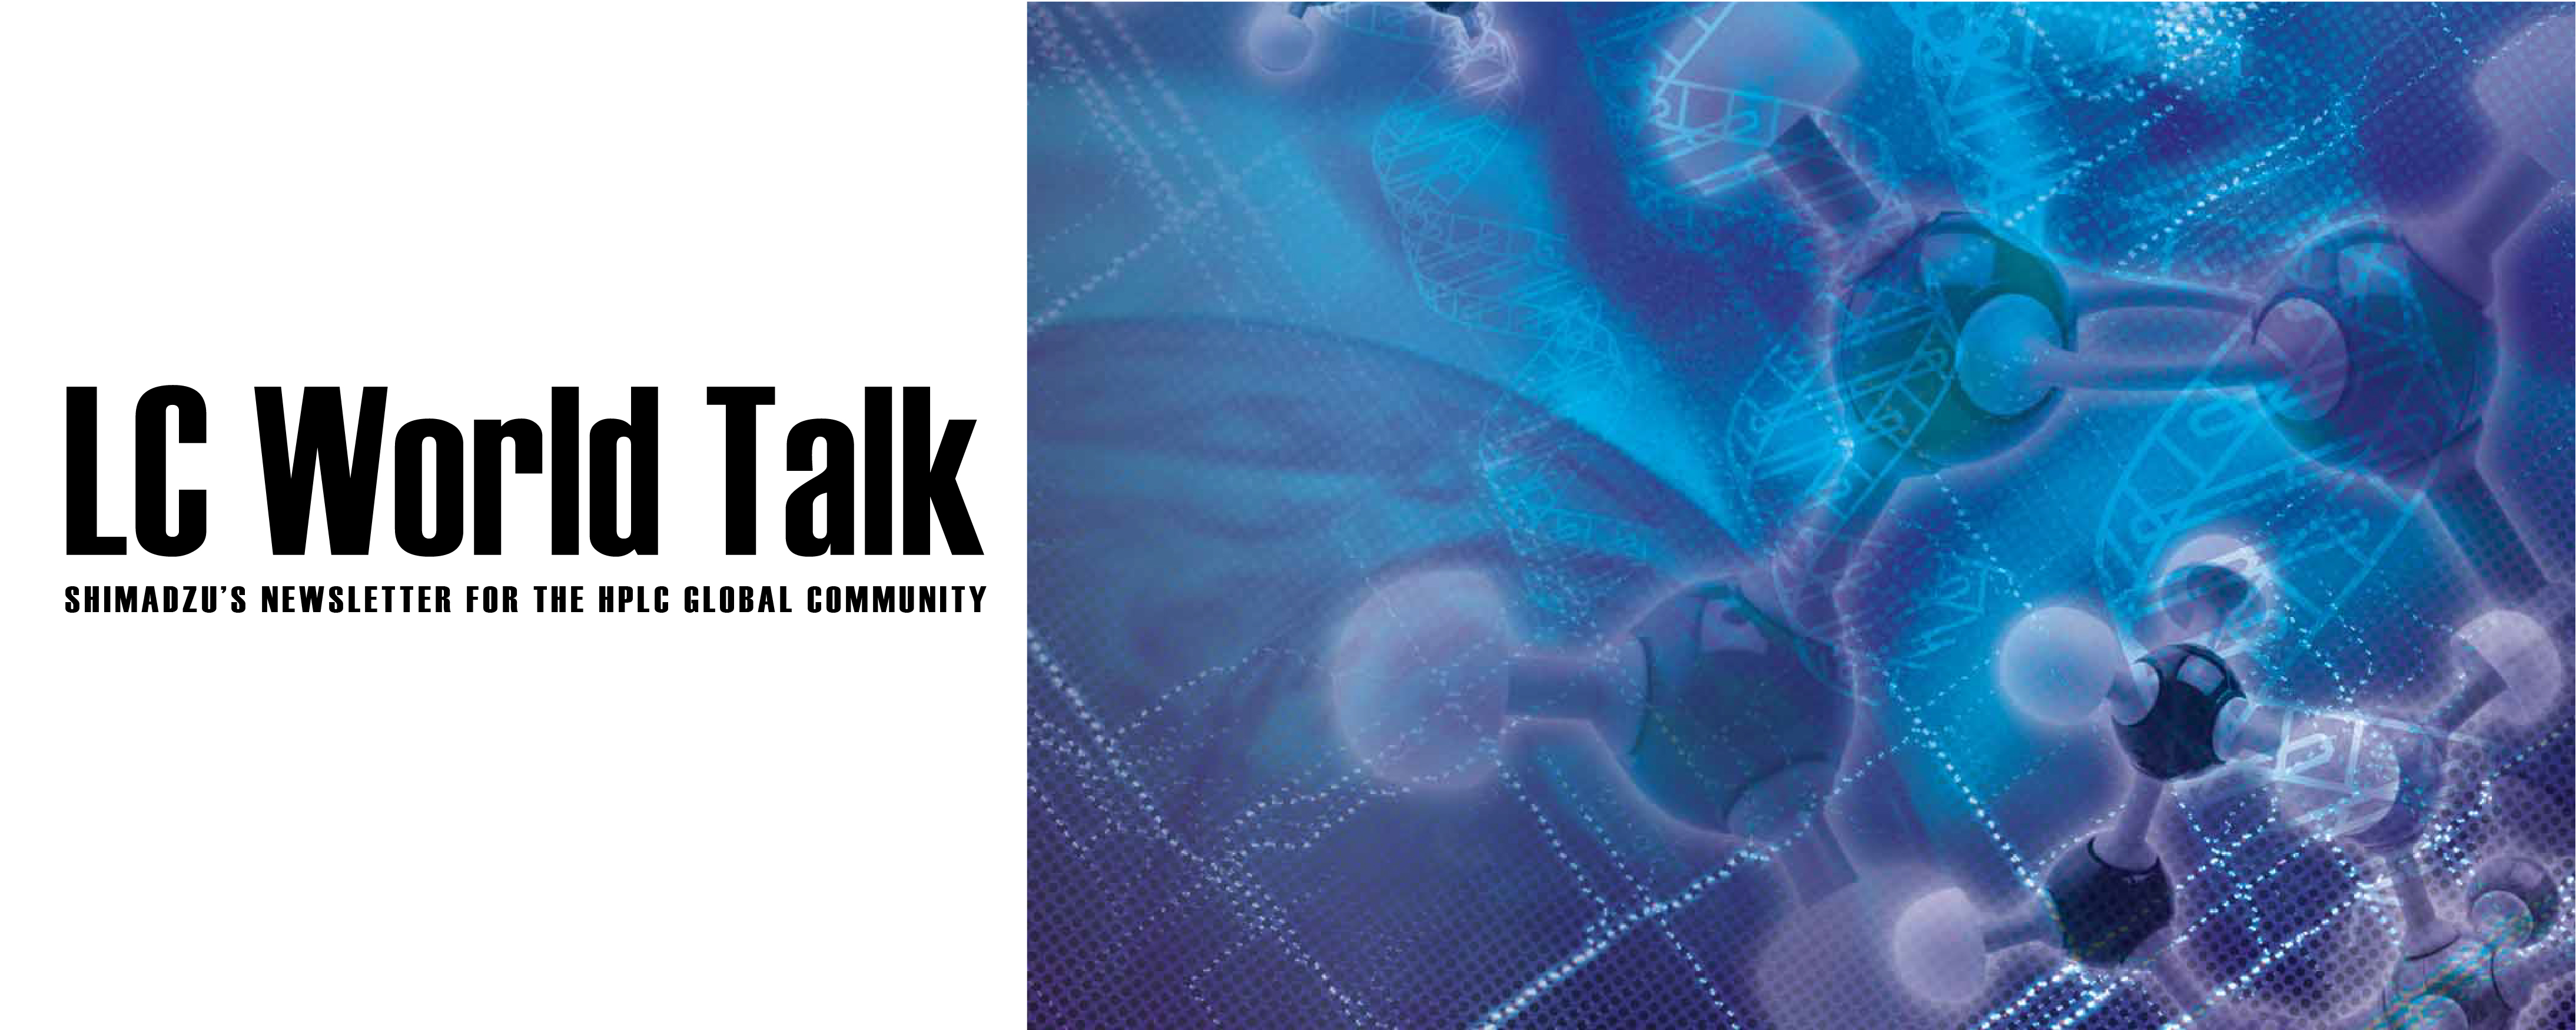 LC World Talk banner